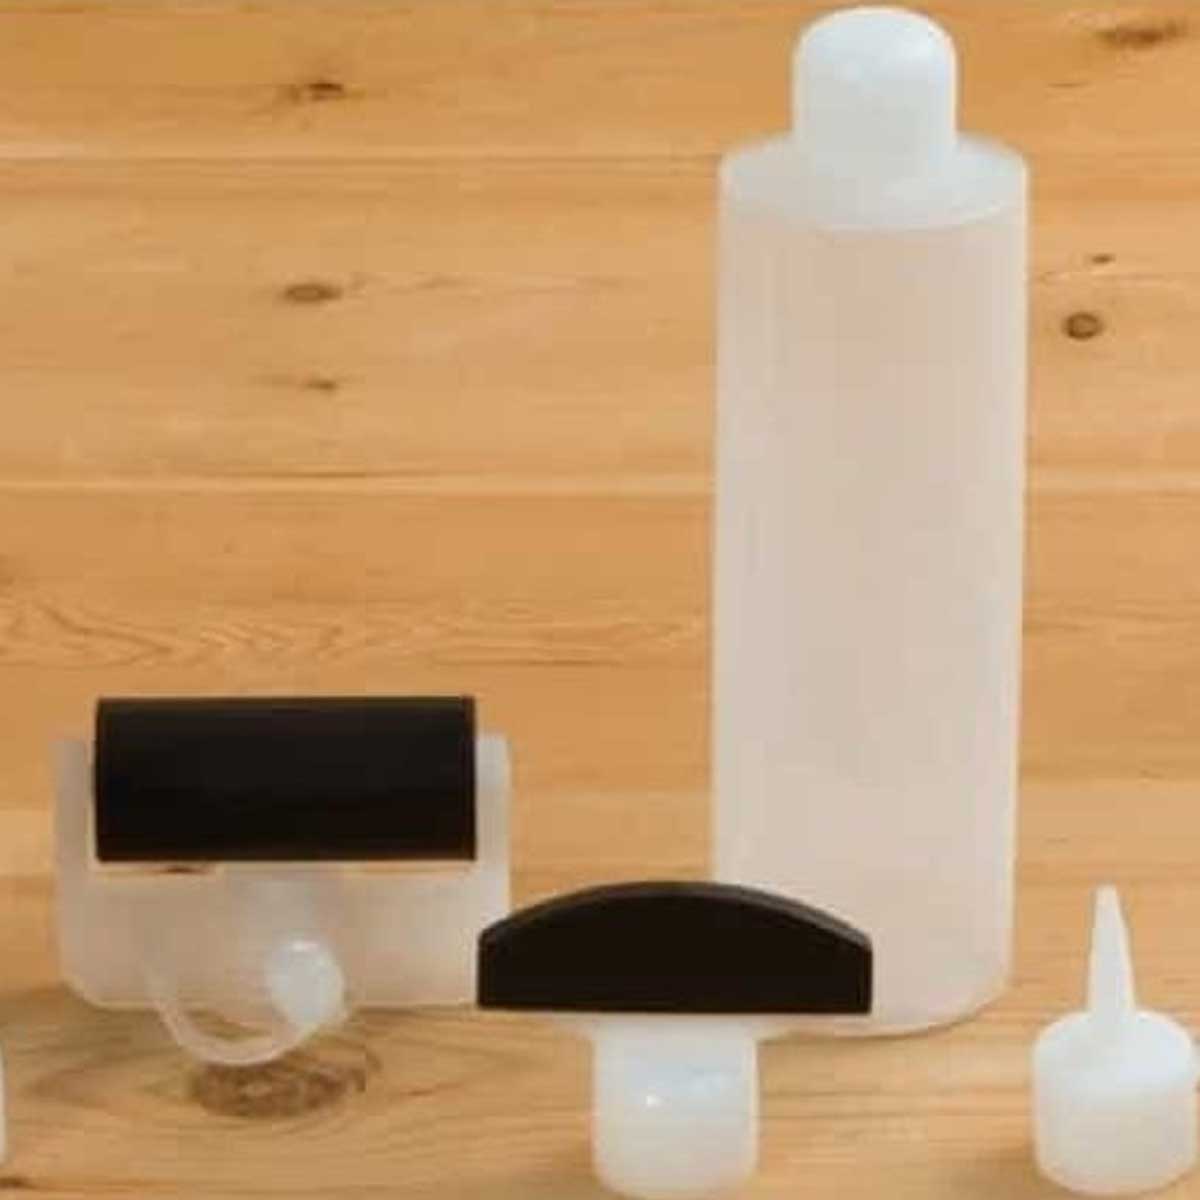 Glue Bottle Applicator Set Manufacturers, Suppliers in Gurugram